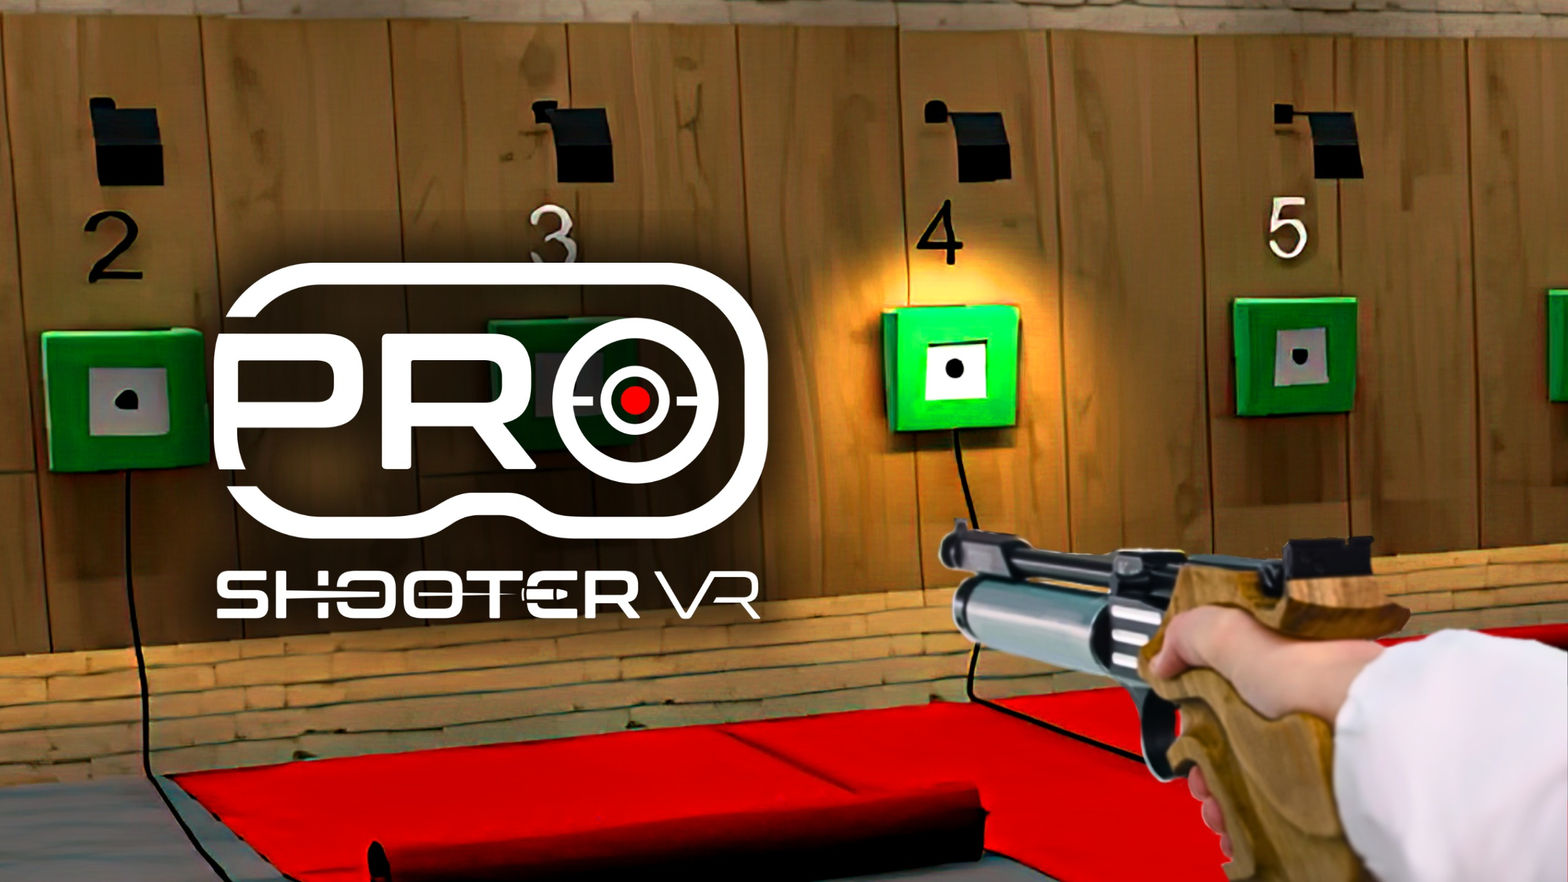 Pro Shooter VR